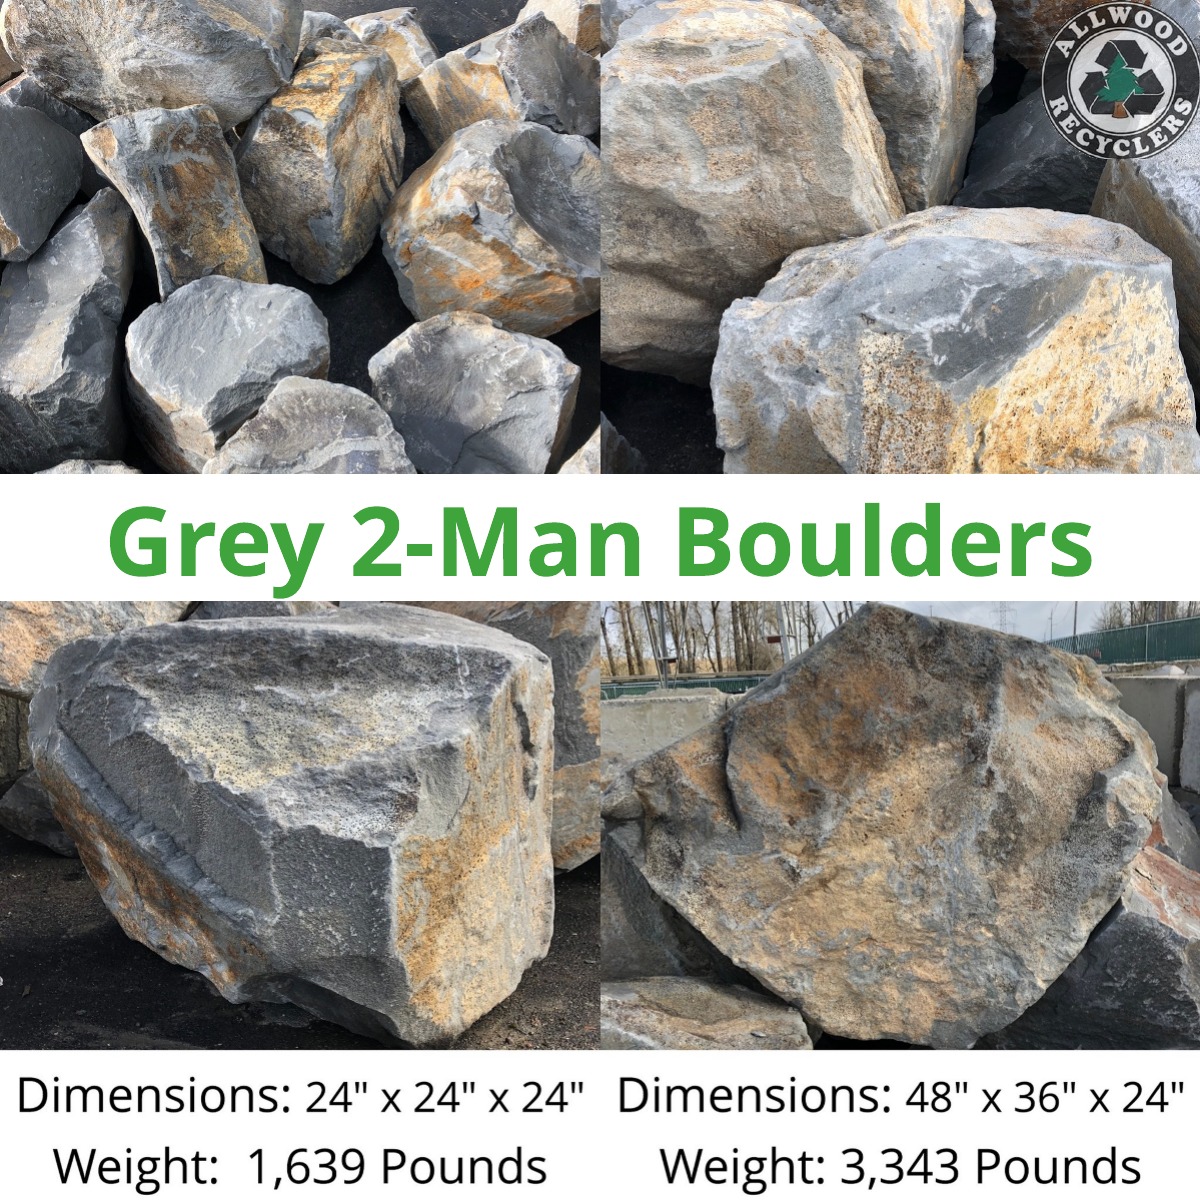 Grey 2-Man Boulders